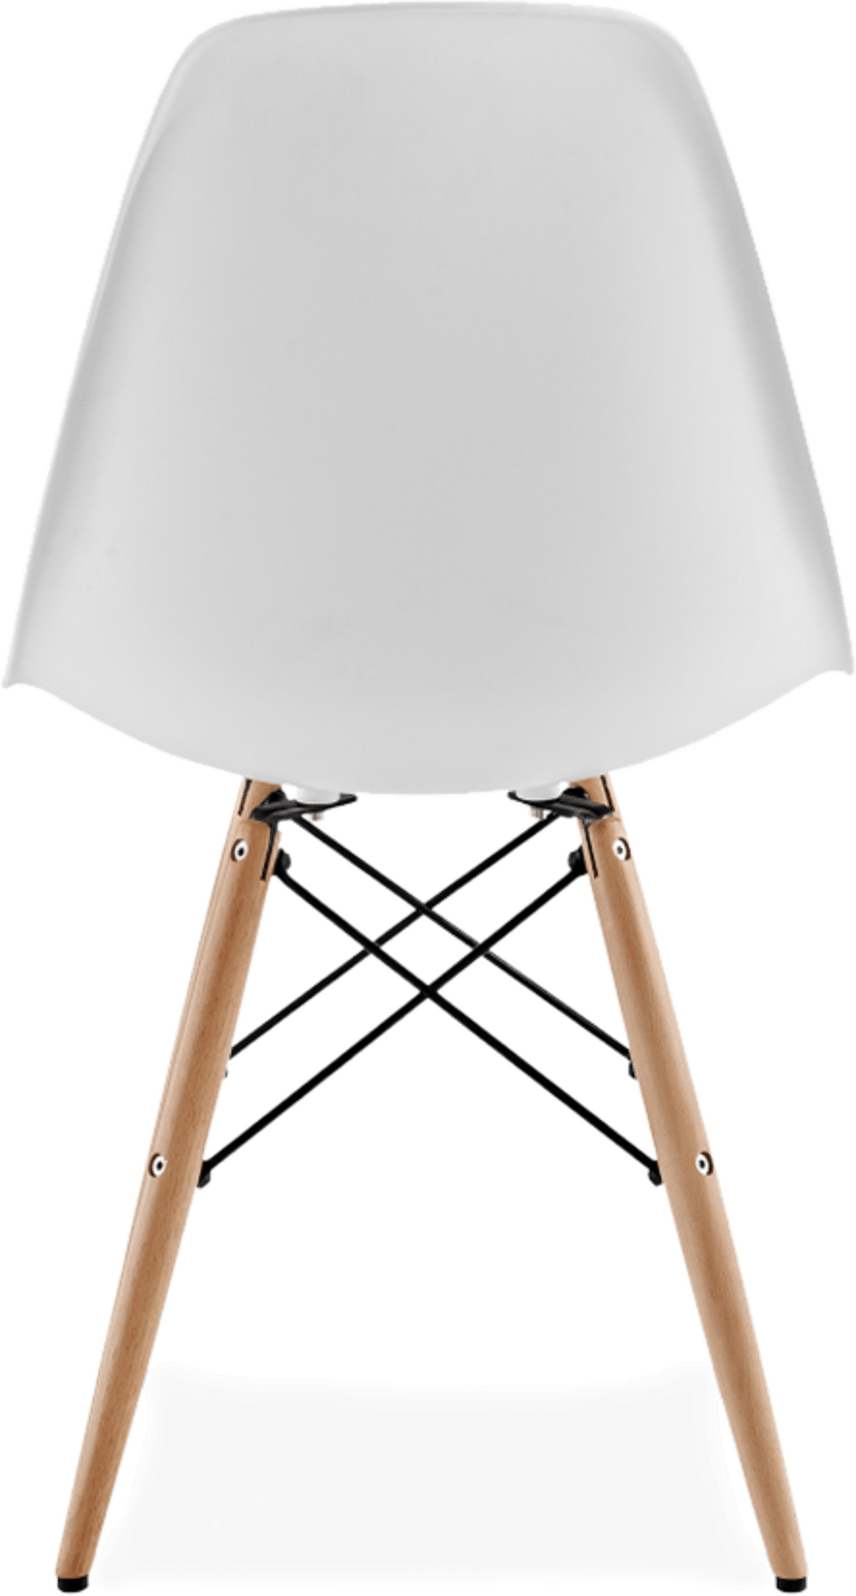 DSW-stoel Mauve/Light Wood image.